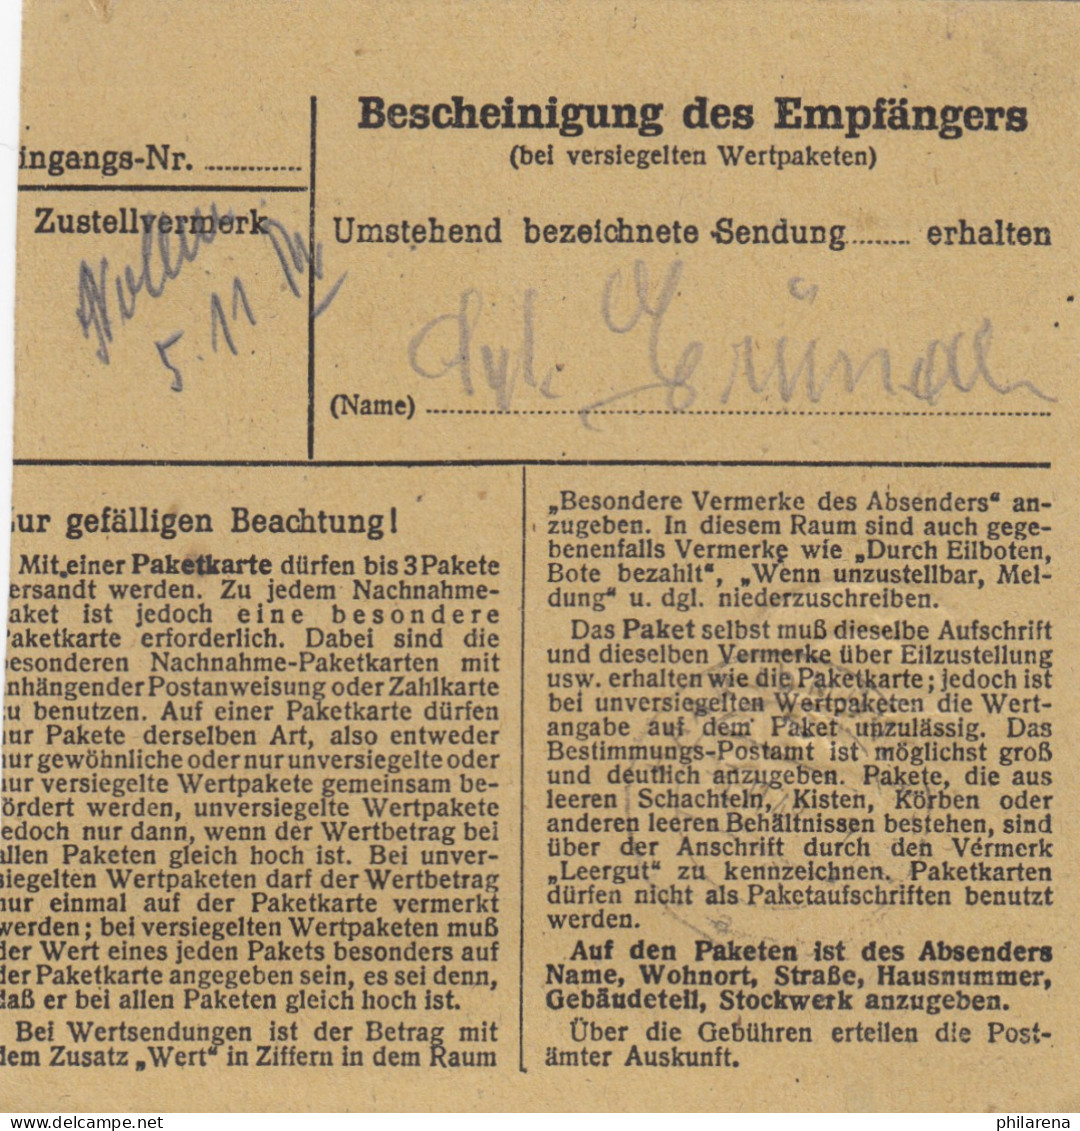 BiZone Paketkarte 1948: Kirchheim Teck Nach Eglfing-Haar, Heilanstalt - Covers & Documents